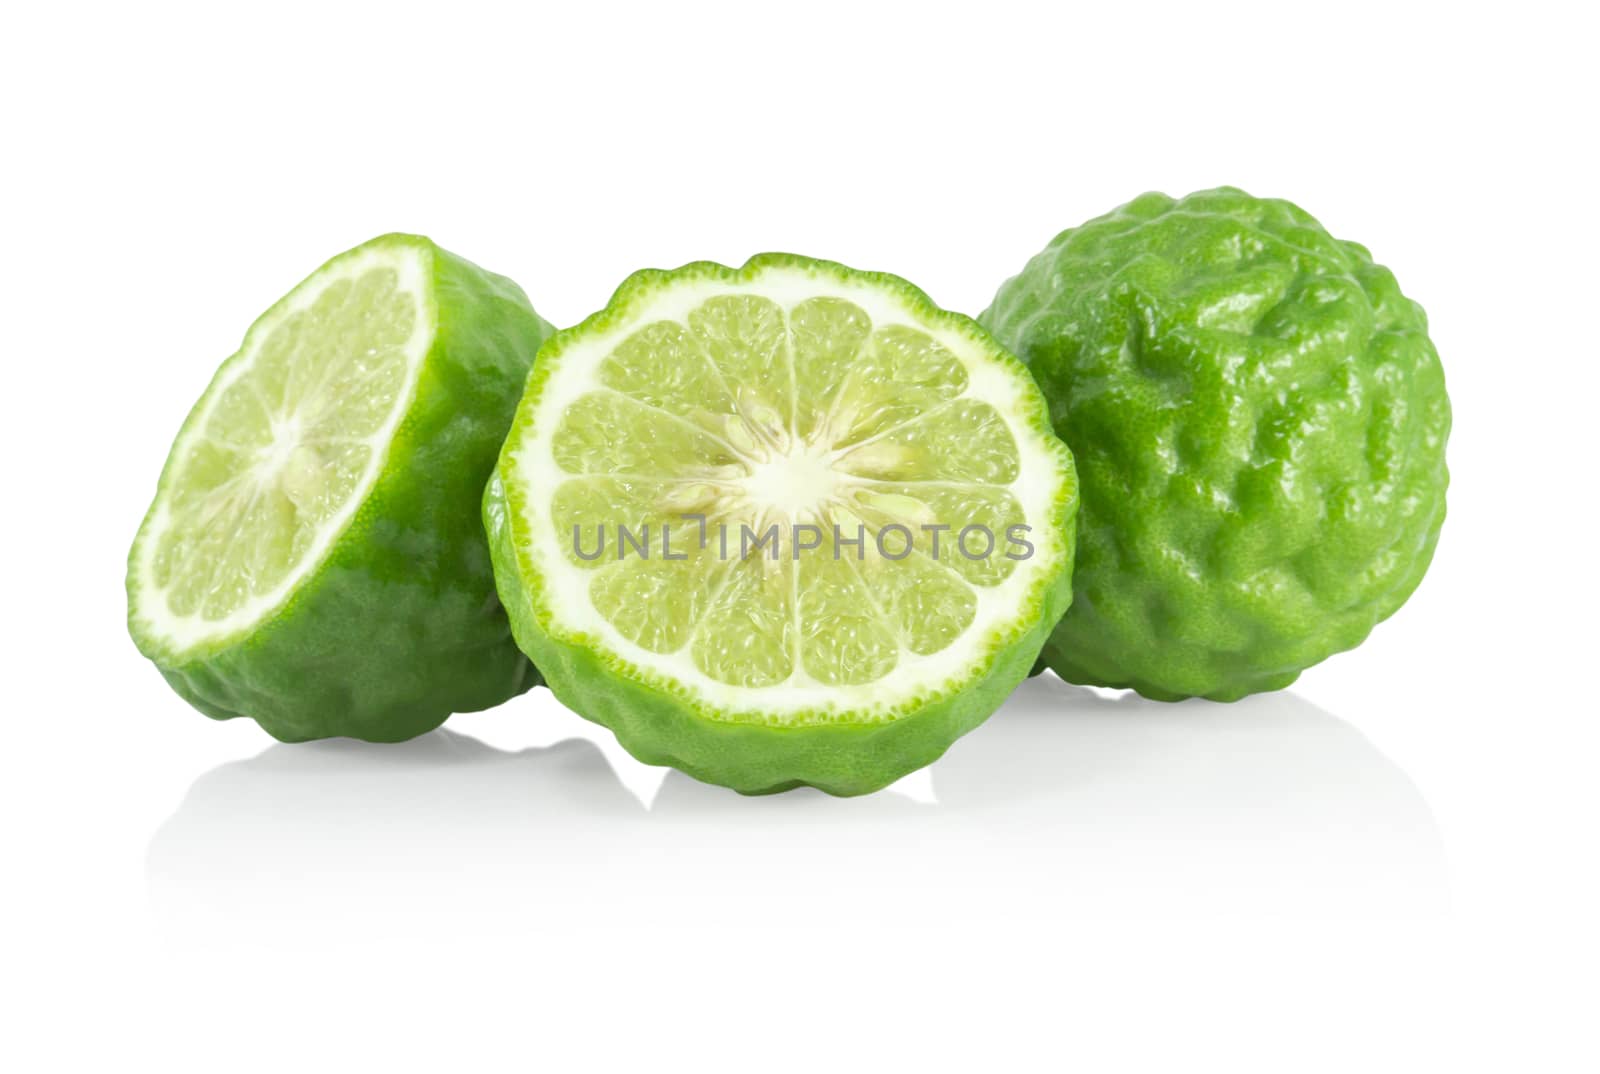 Fresh bergamot fruit slice with green leaf isolated on white background, herb and medical